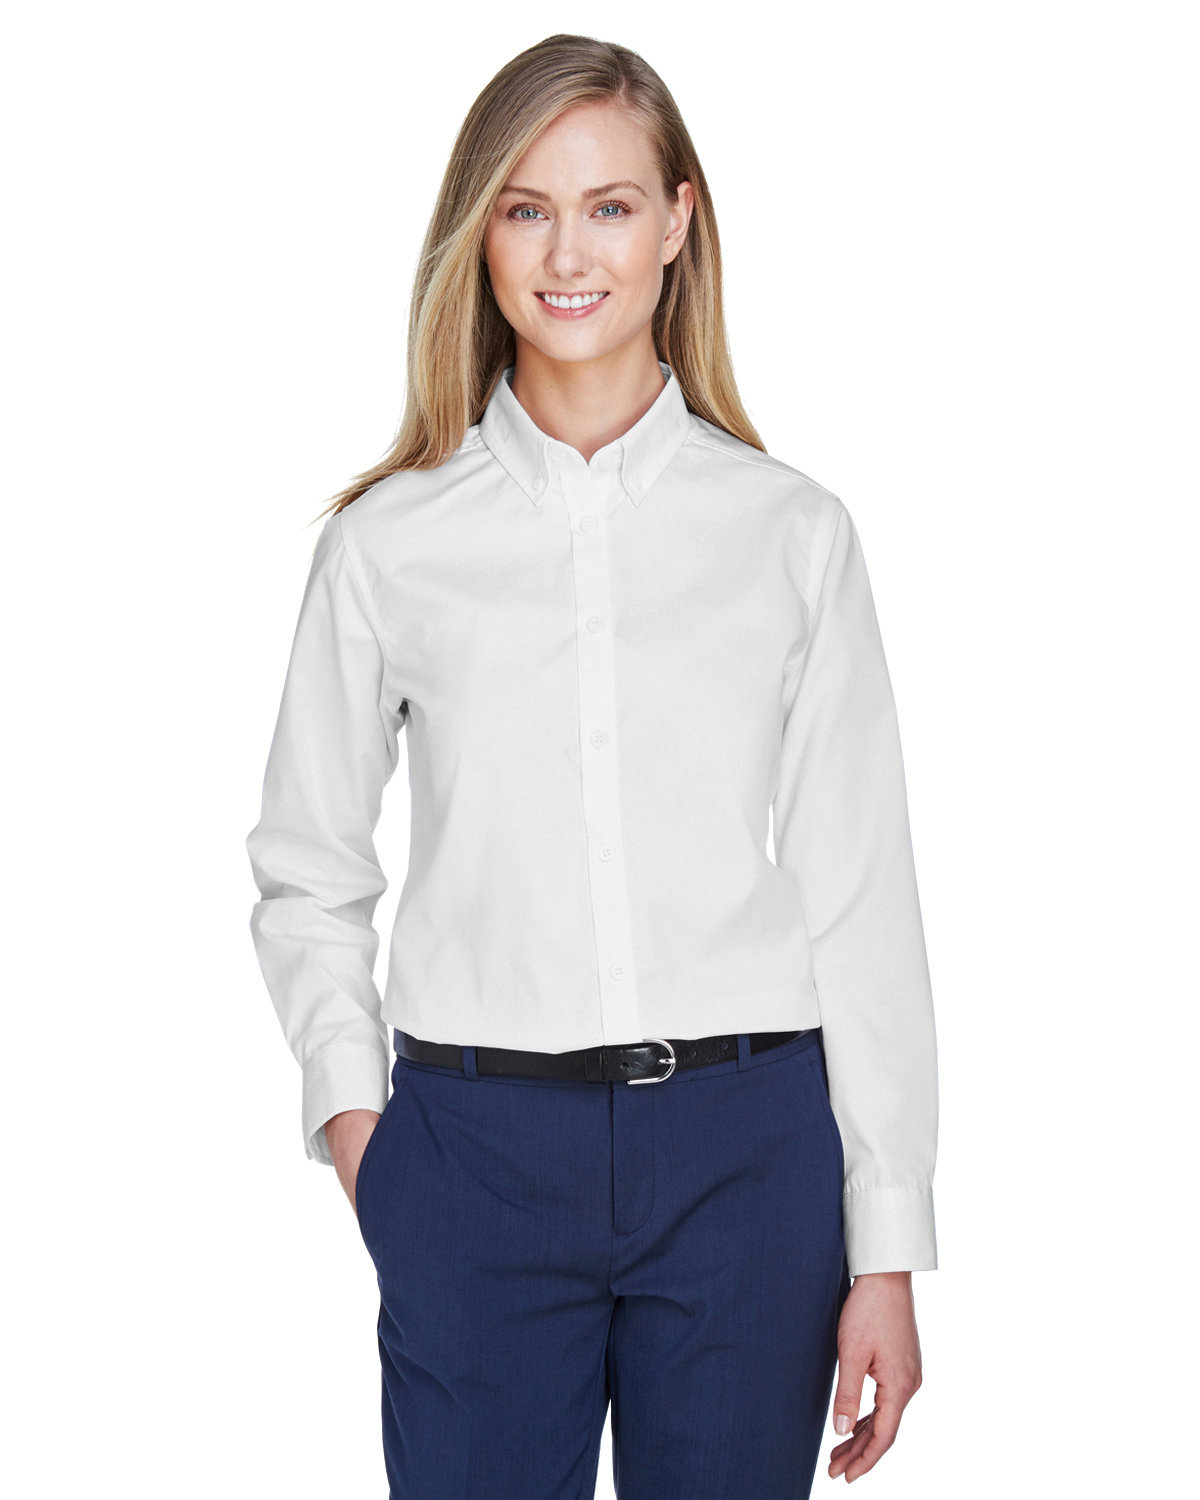 CORE365 Ladies' Operate Long-Sleeve Twill Shirt WHITE 